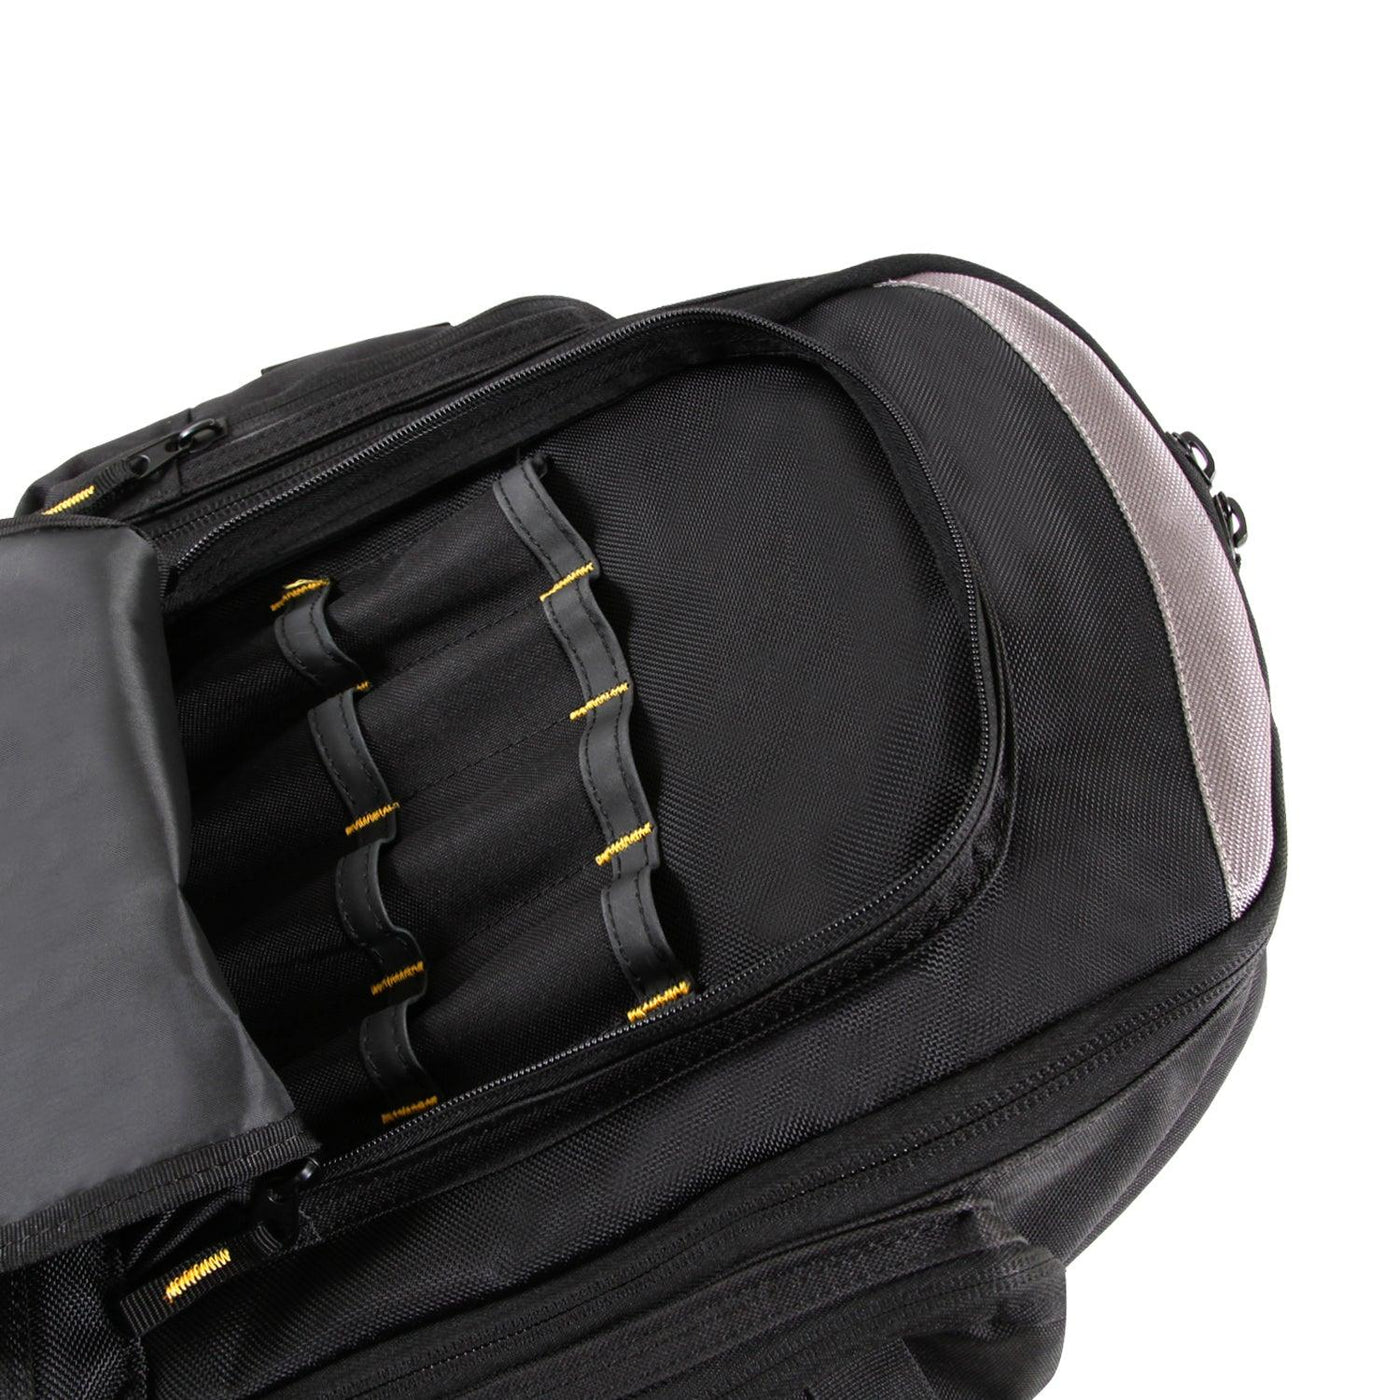 Front pocket of Task tool backpack